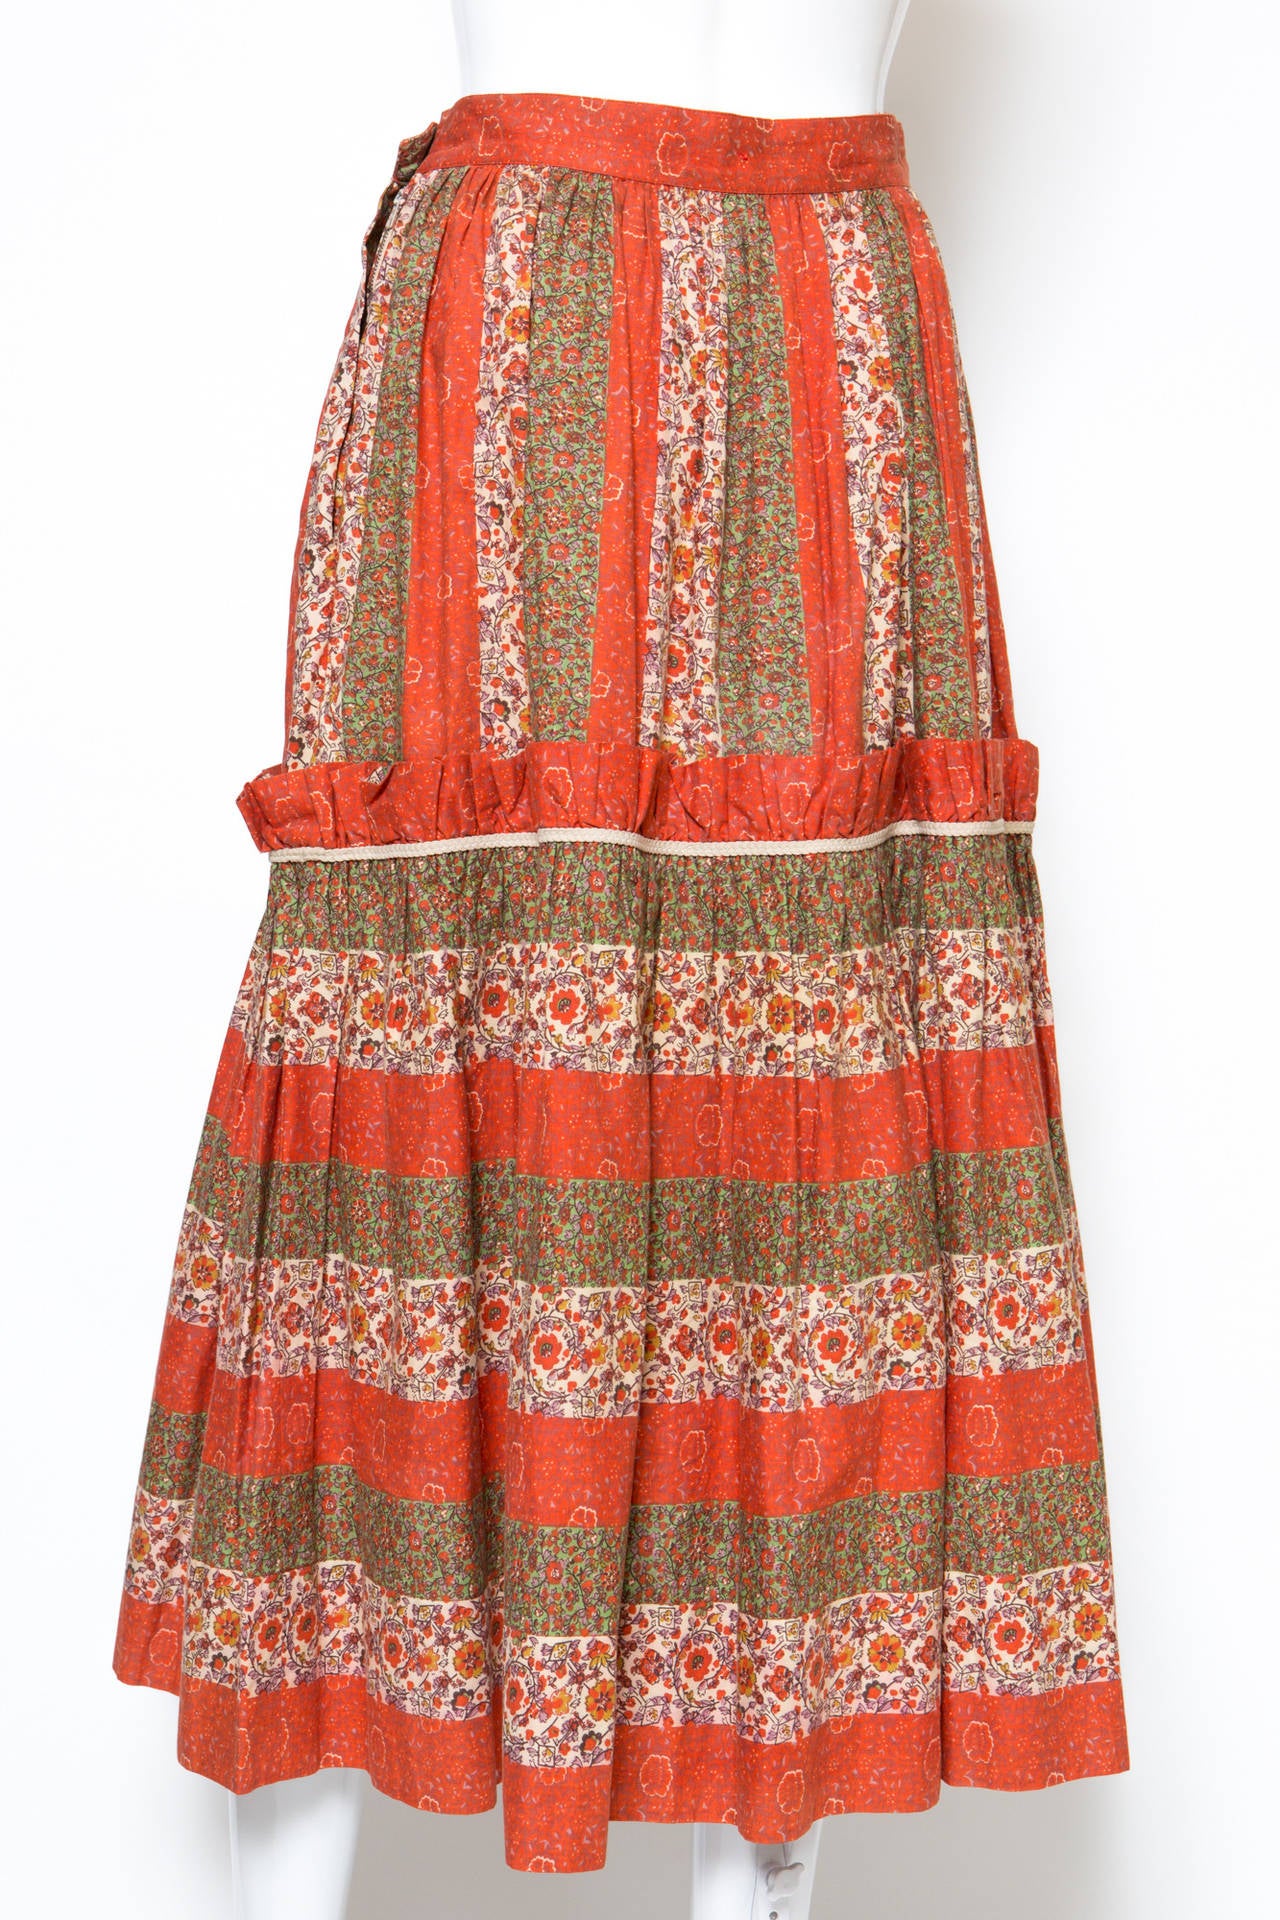 1970s Gorgeous Saint-Laurent Cotton Peasant Skirt at 1stdibs